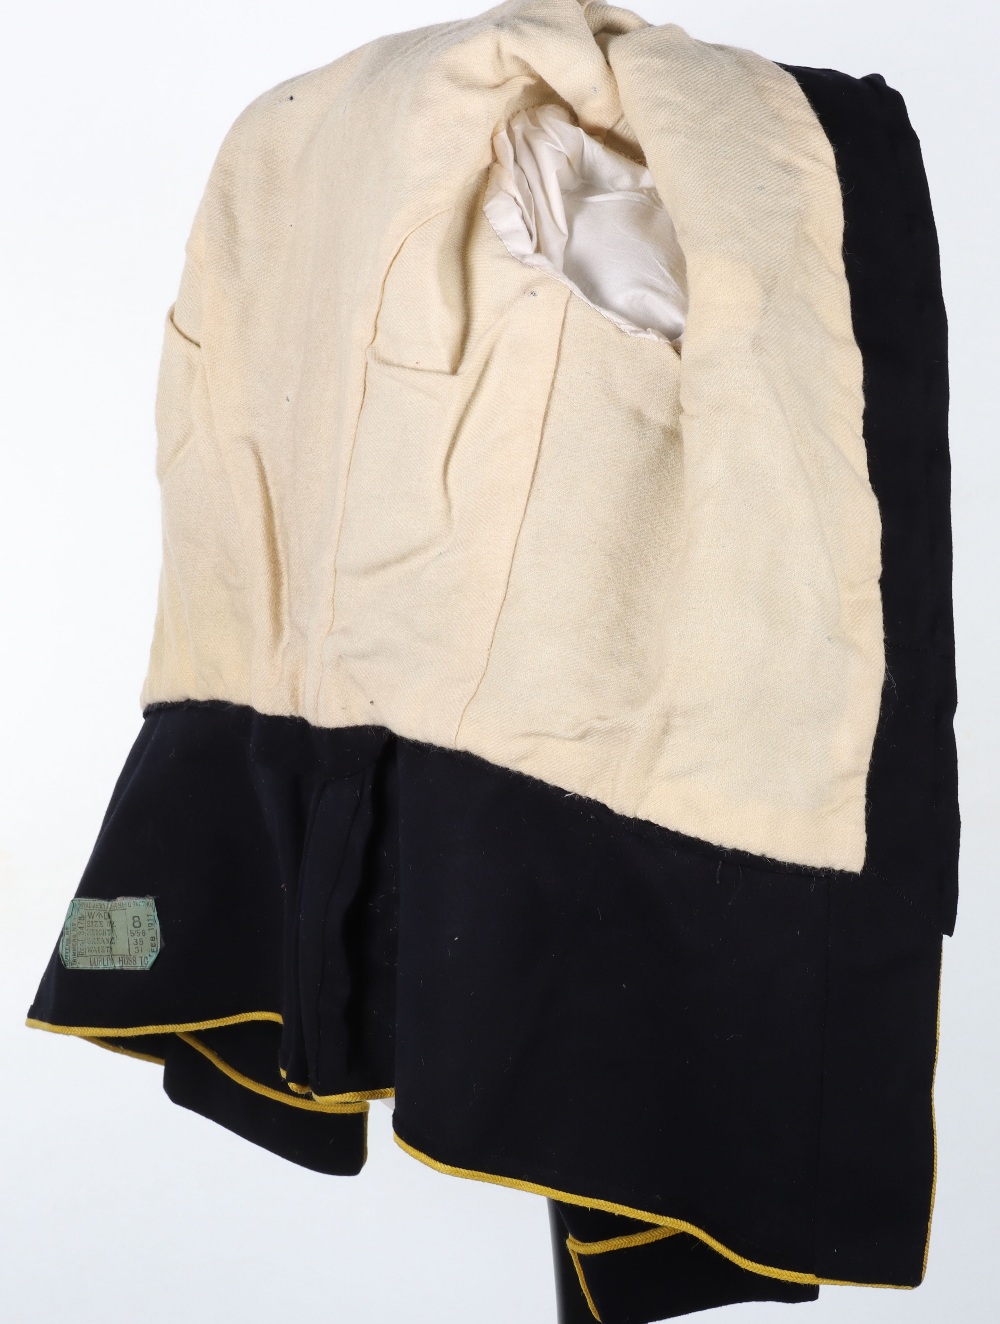 Pre-WW1 British 11th Hussars Other Ranks Dress Uniform - Image 11 of 15